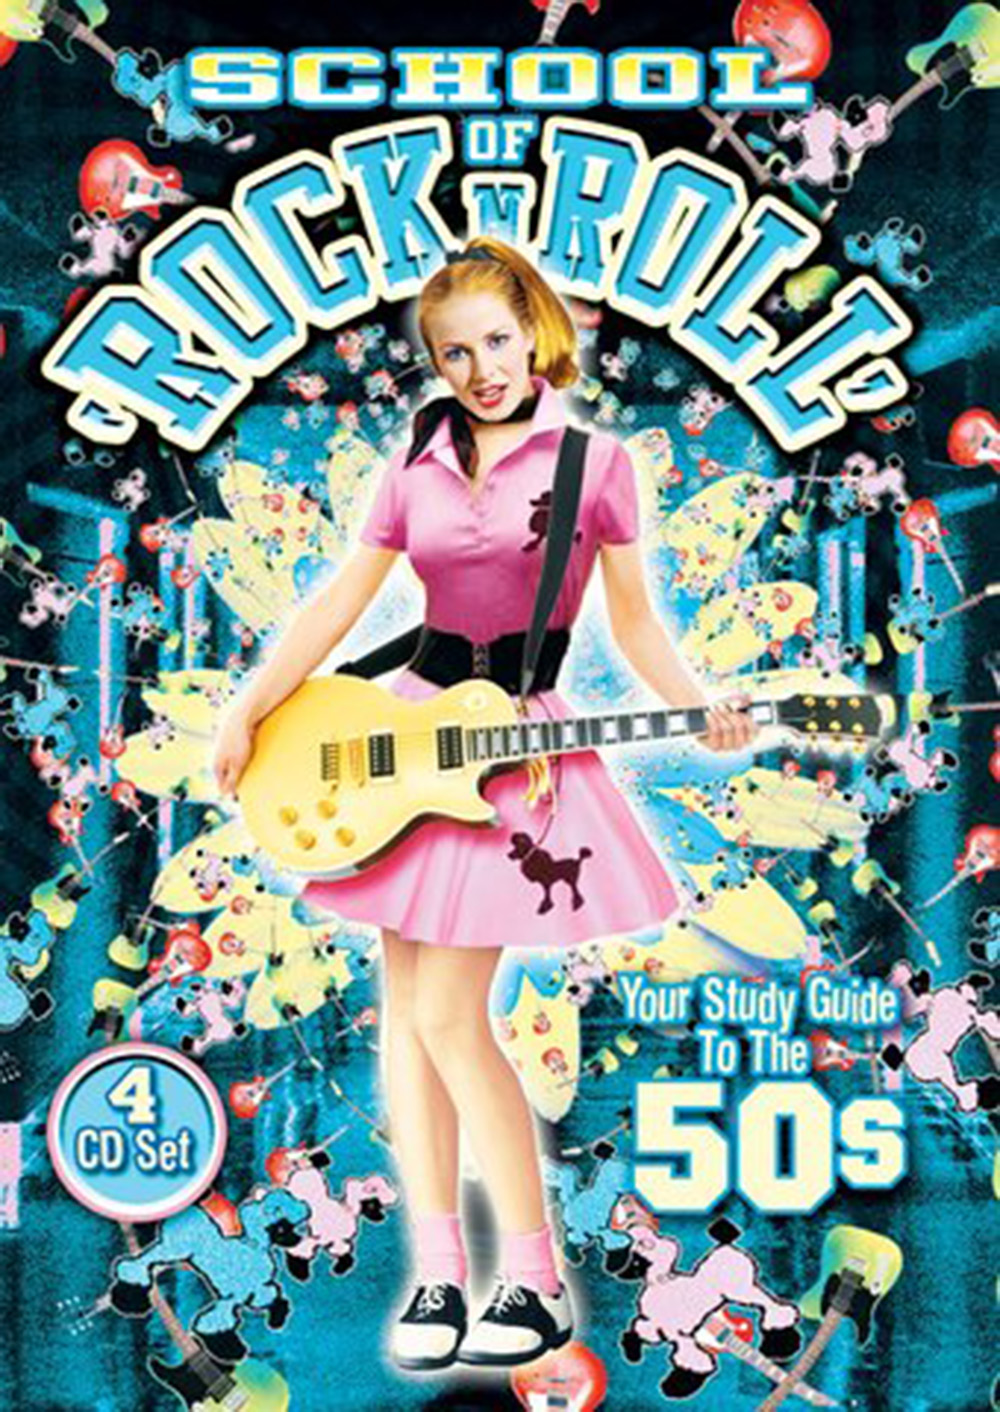 School Of Rock & Roll- The 50s (4 CD)